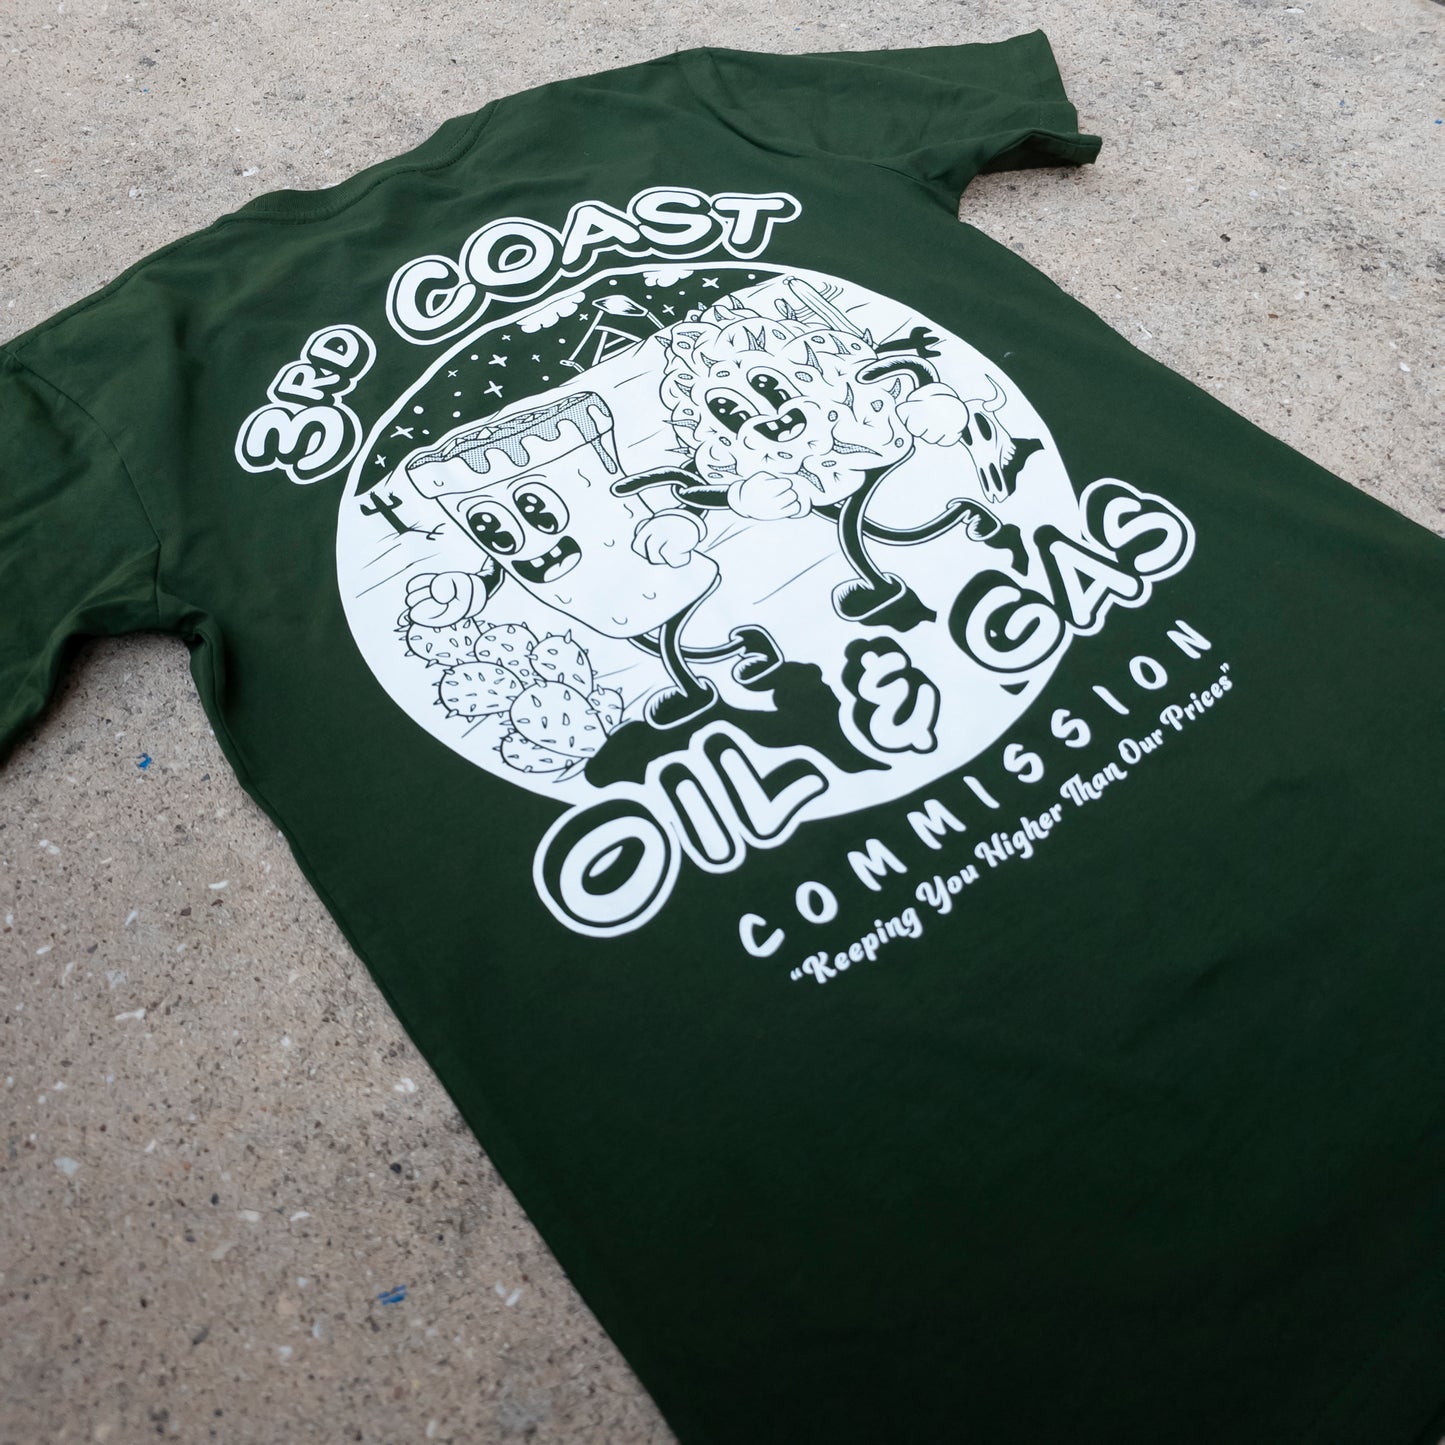 Oil & Gas Commission T-Shirt